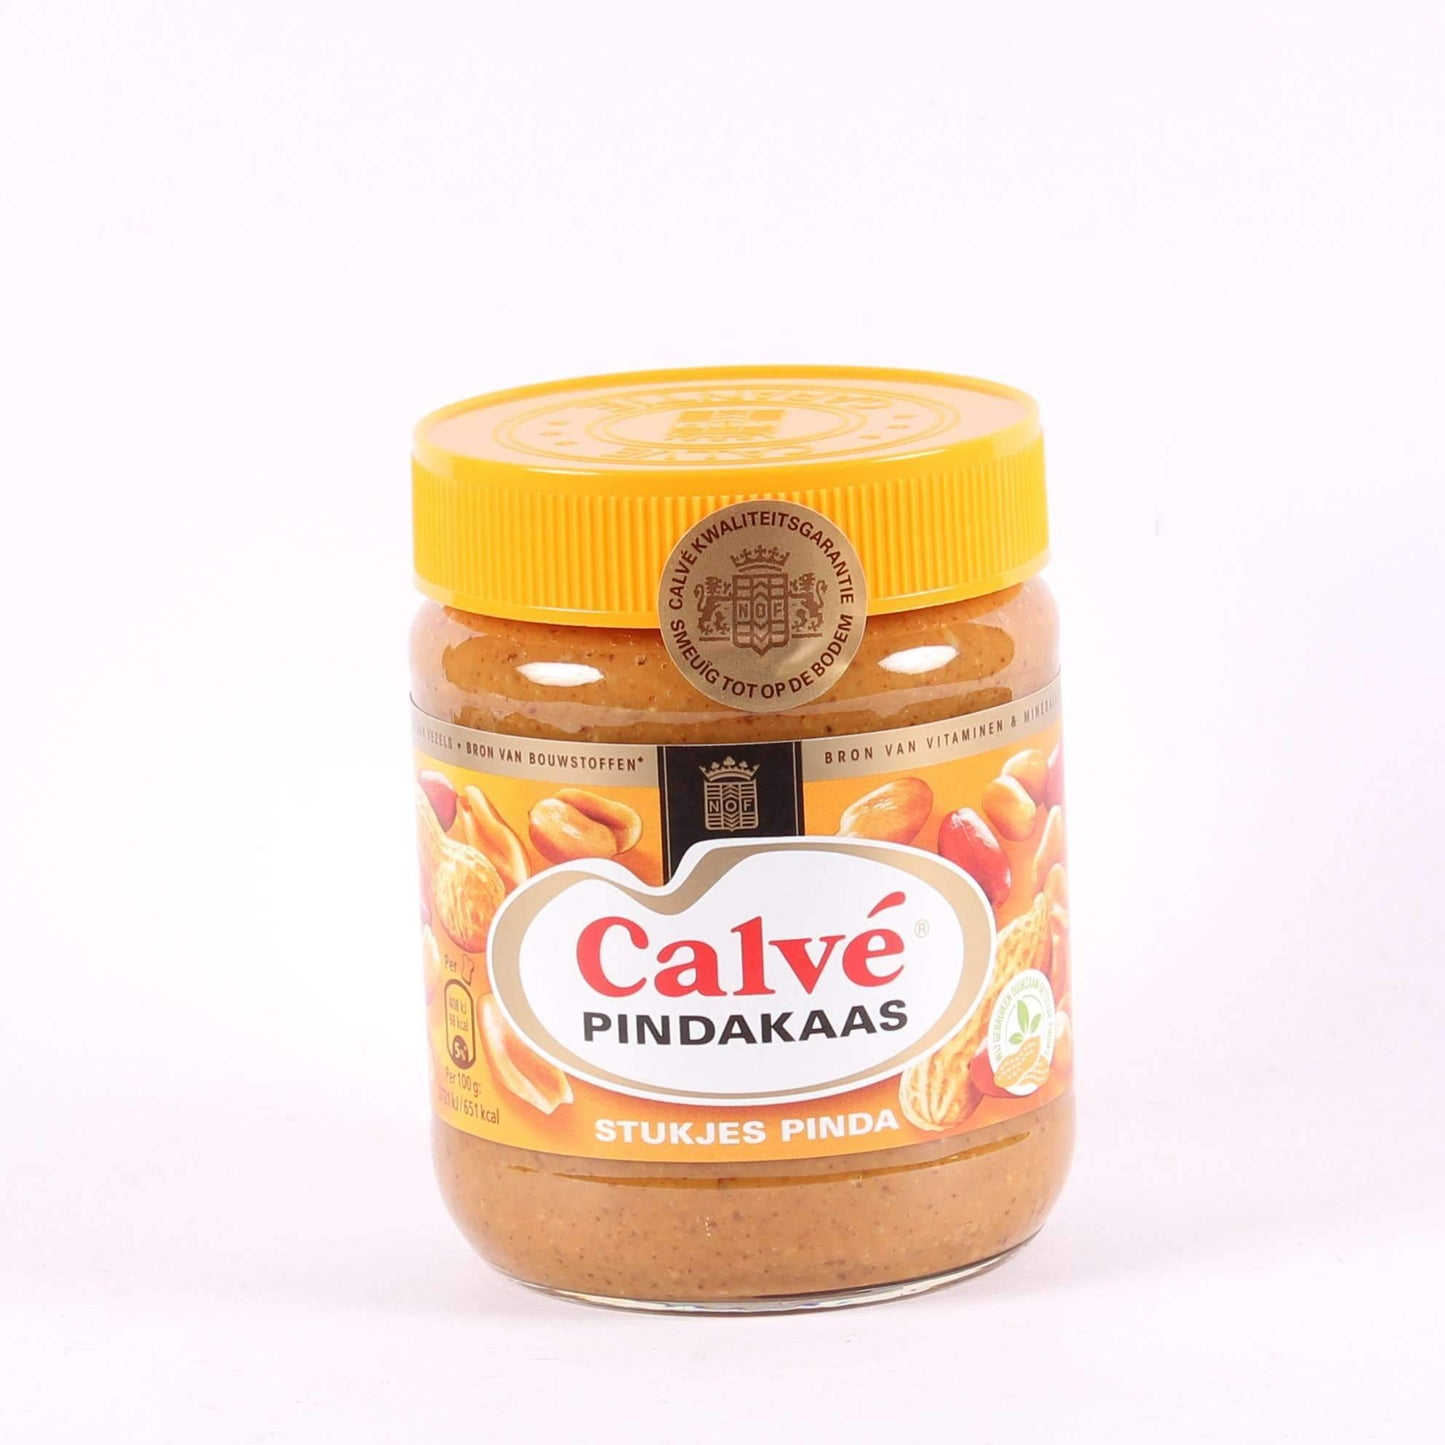 Calvé Pindakaas with Peanutpieces, Dutch Peanutbutter